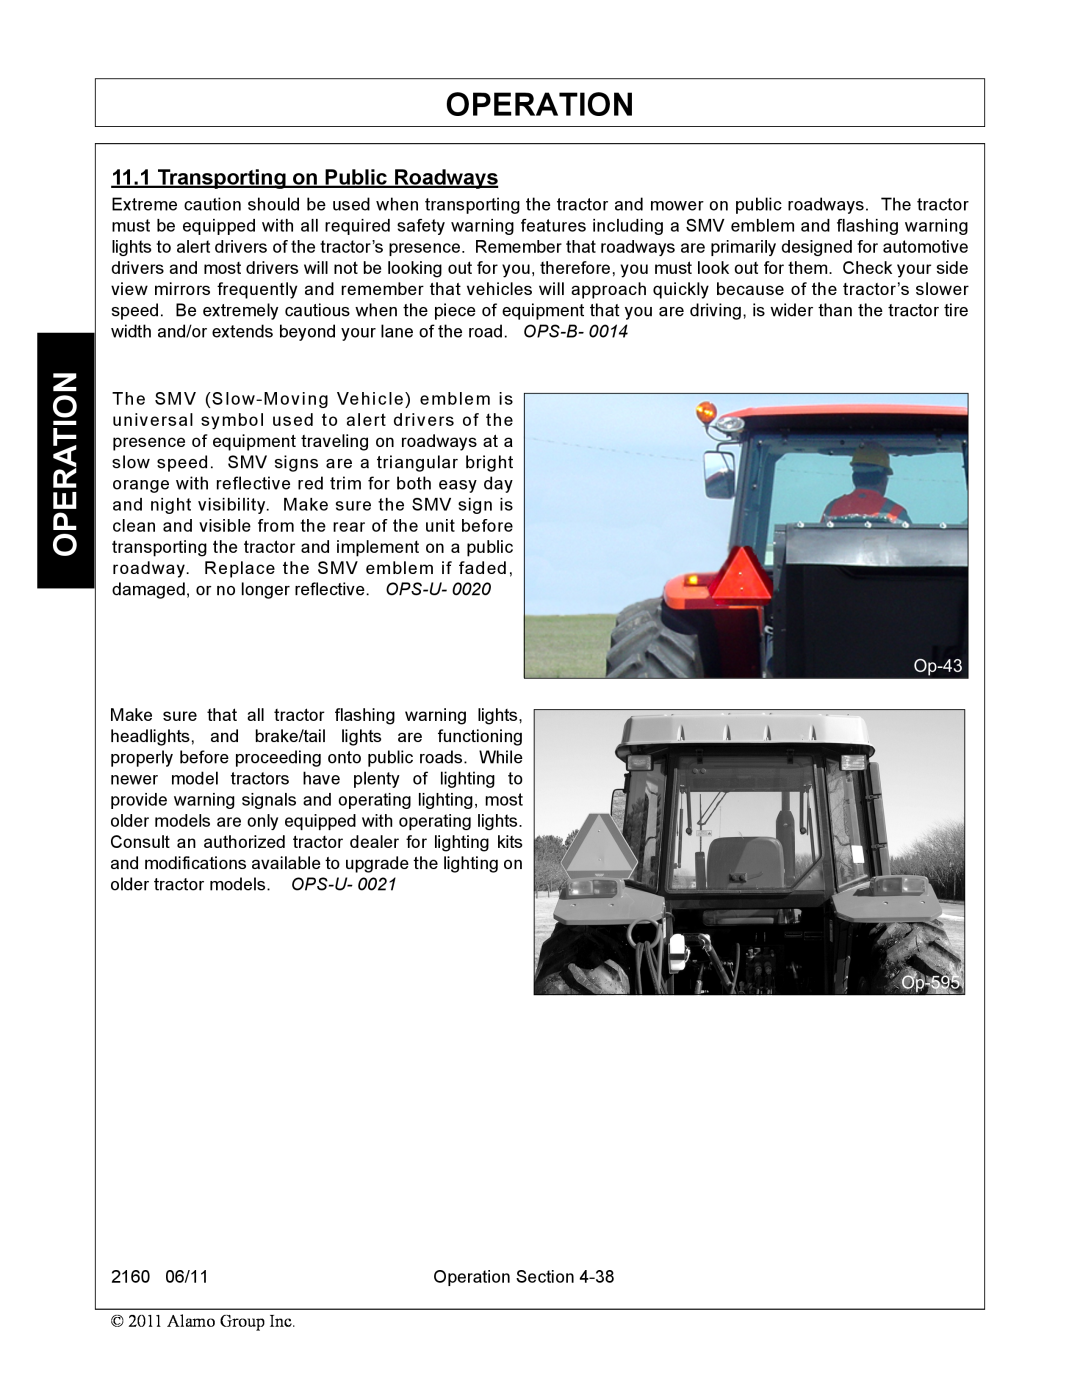 Servis-Rhino 2160 manual Operation, Transporting on Public Roadways 